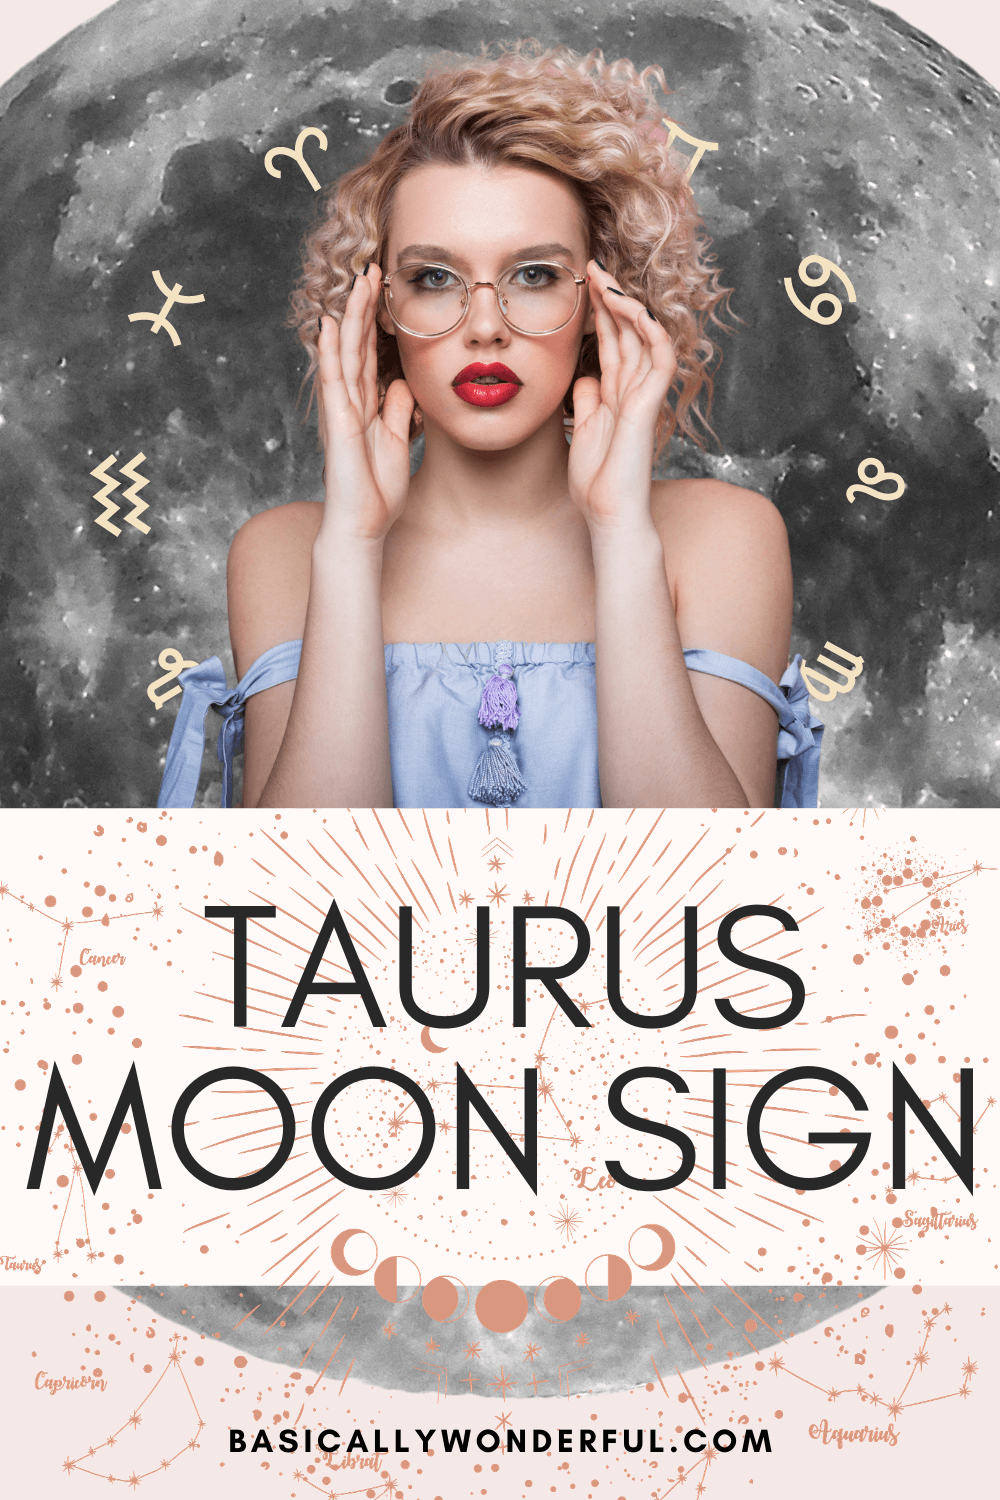 Taurus Moon Woman Traits and Why She's Amazing Basically Wonderful